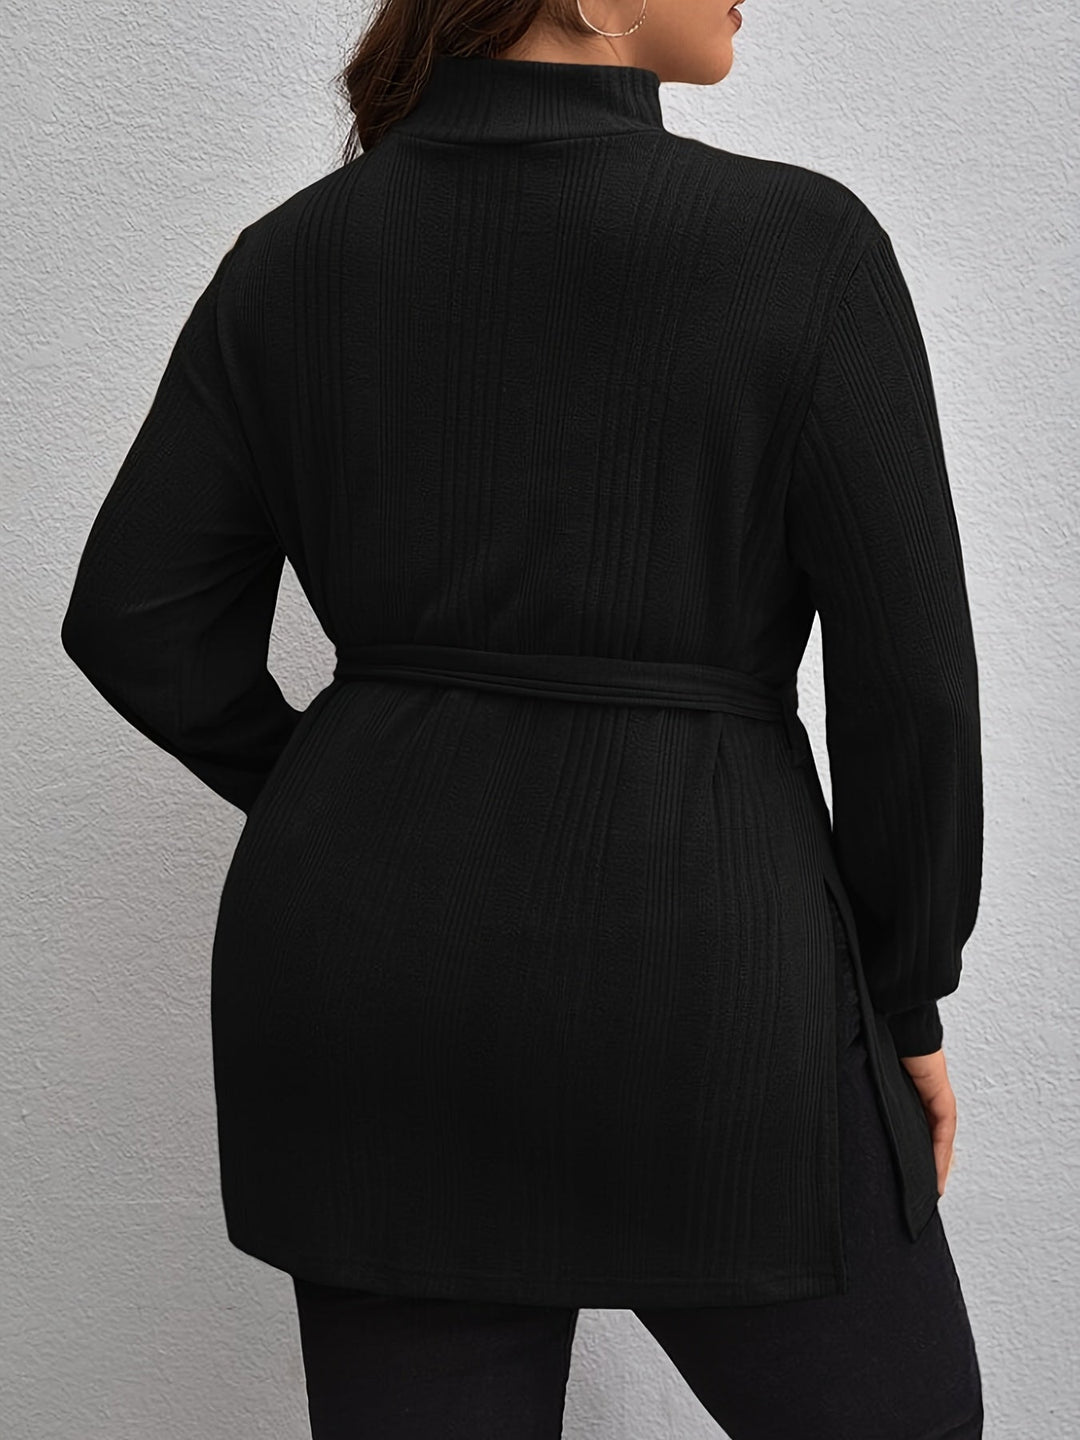 Fall Winter Stylish Black Long Sleeve Ribbed Split Pullover - Gen U Us Products